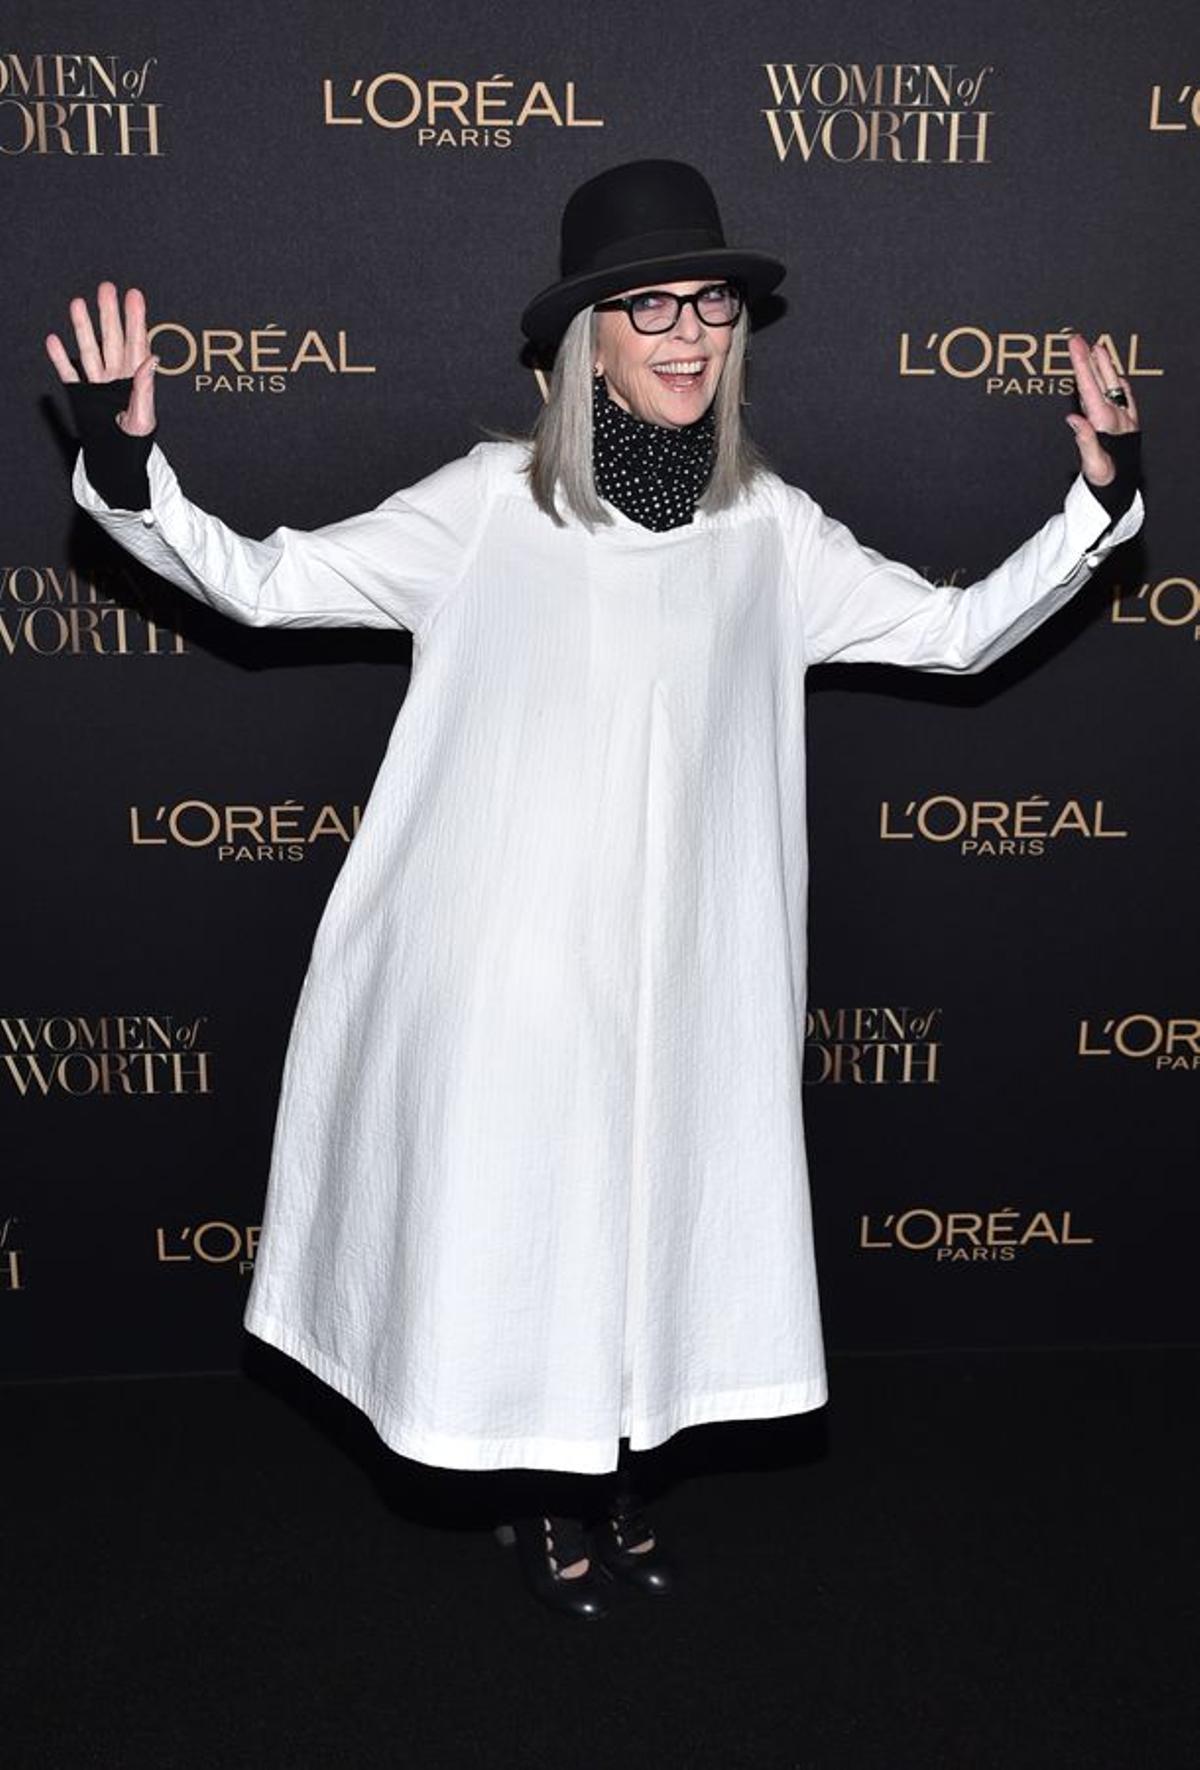 L'Oreal Women of Worth Awards: Diane Keaton